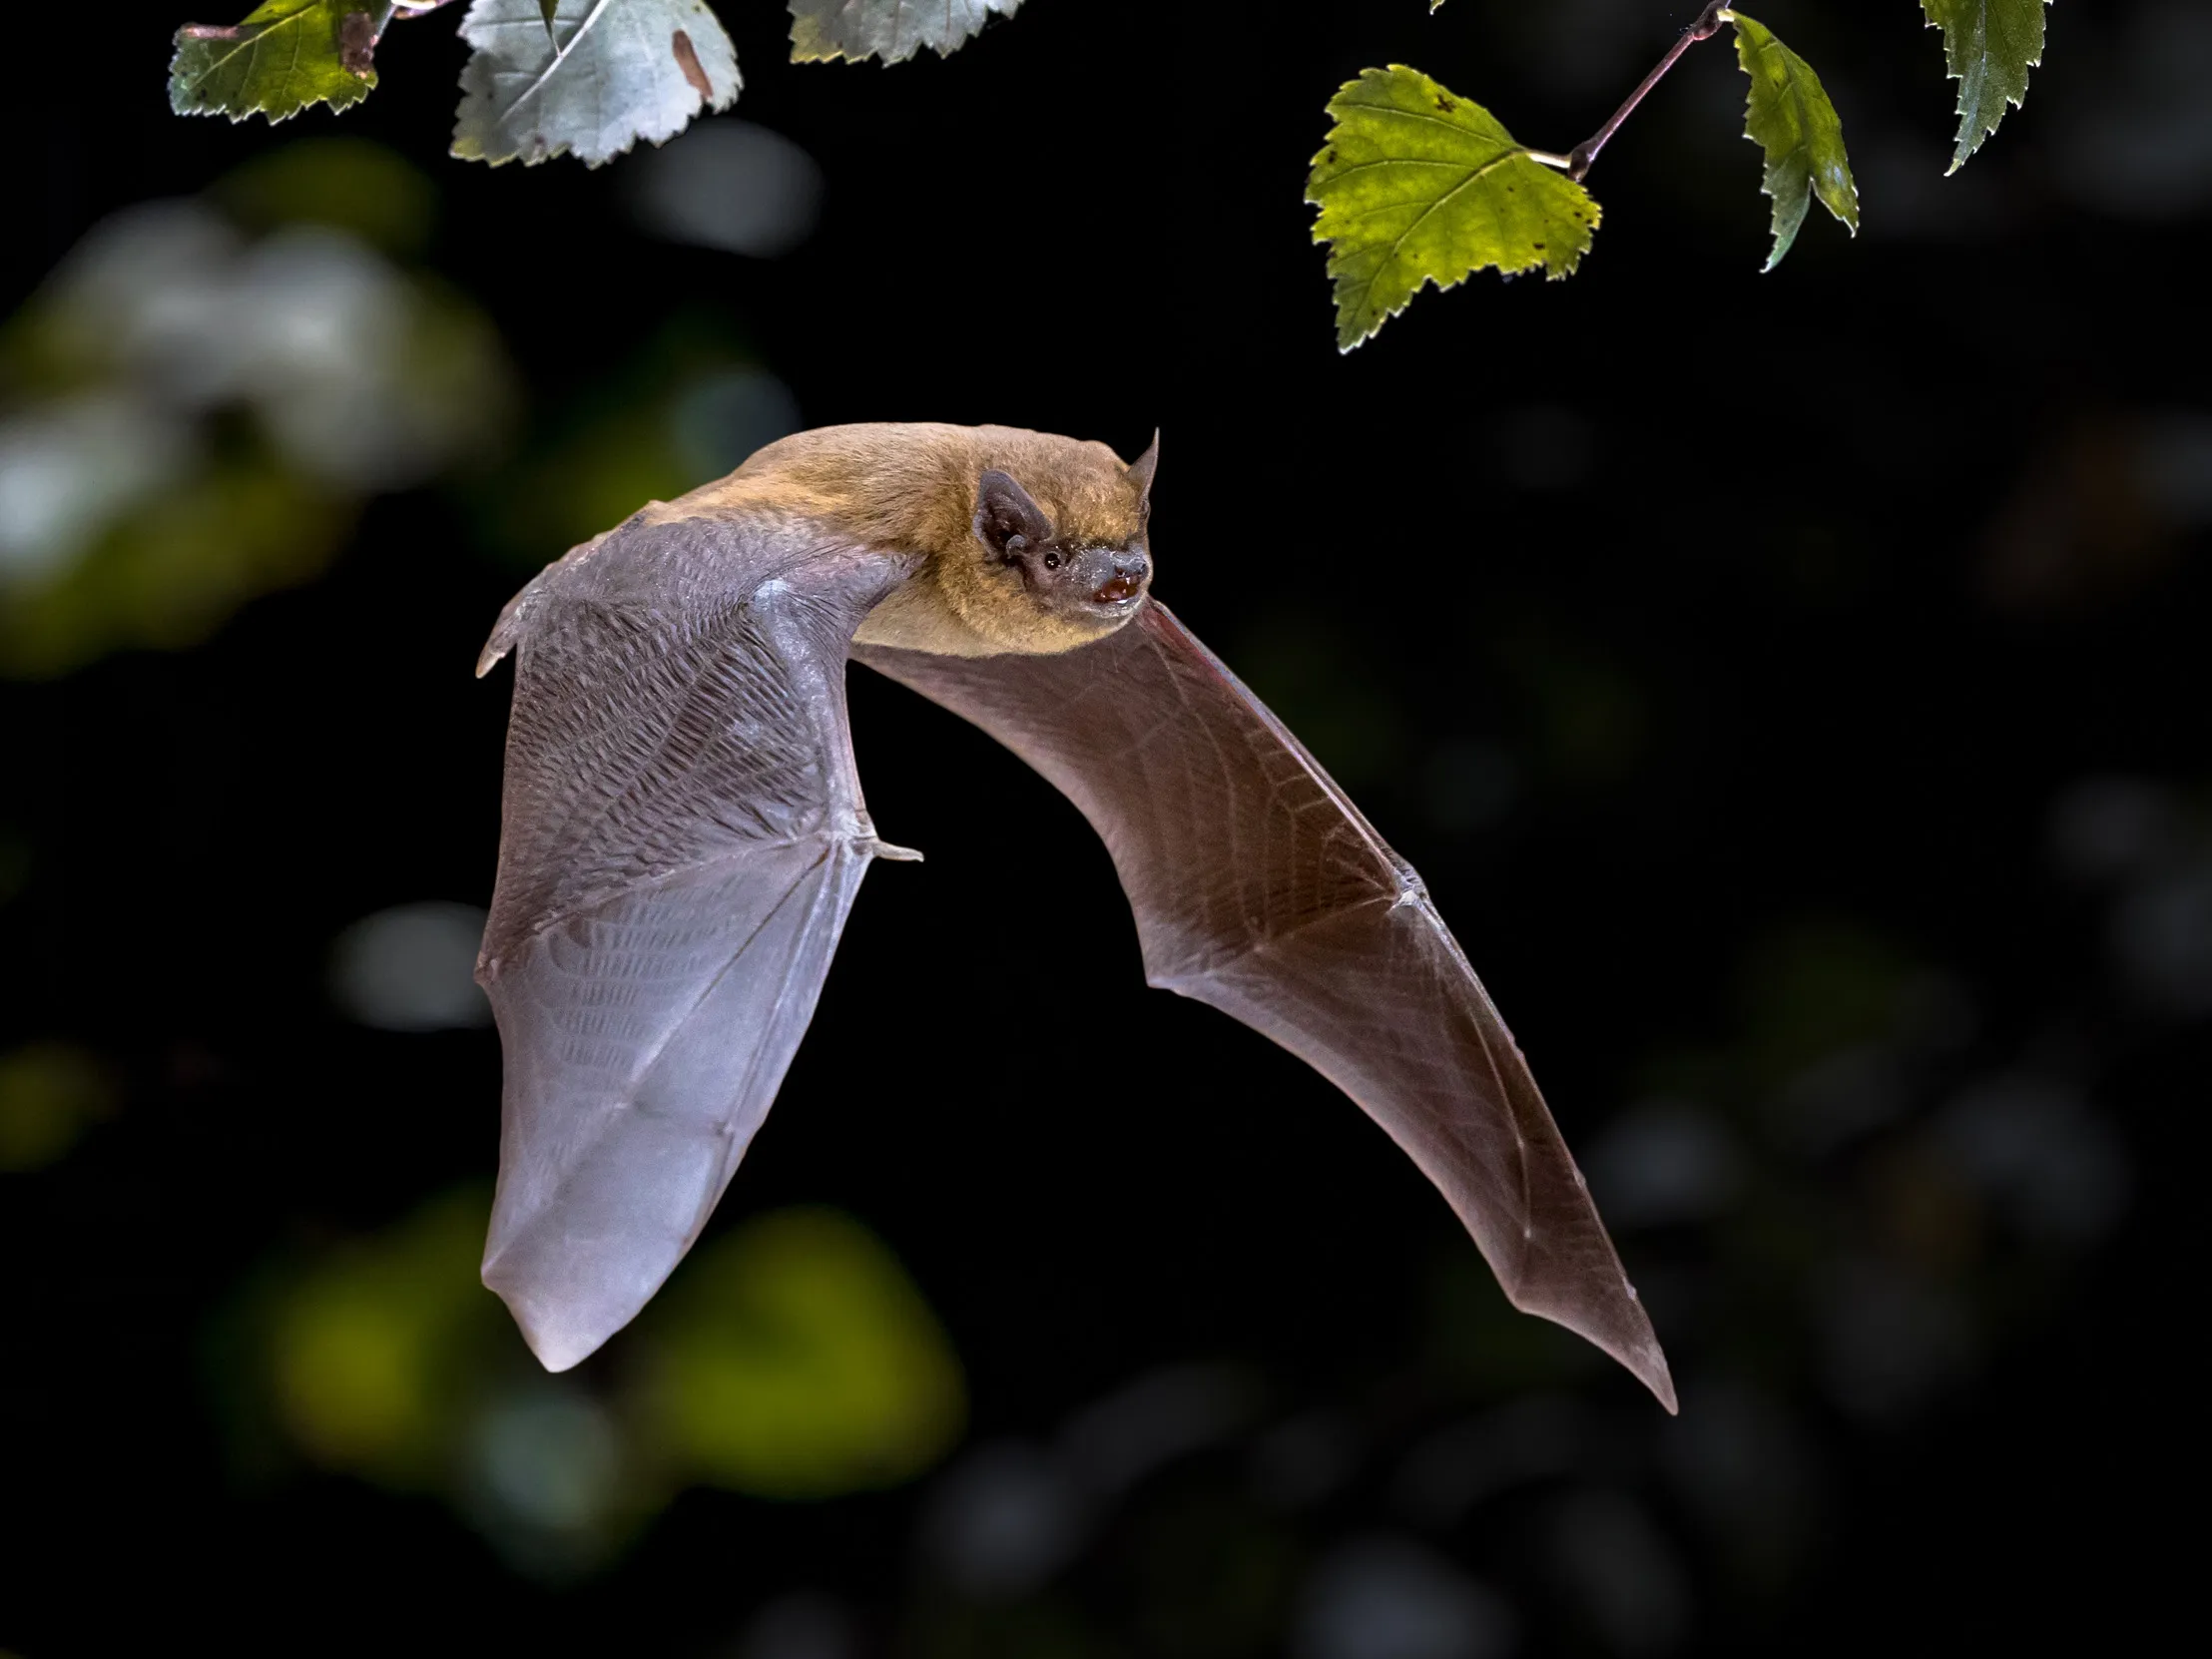 A Pipistrelle Bat flying under green leaves.